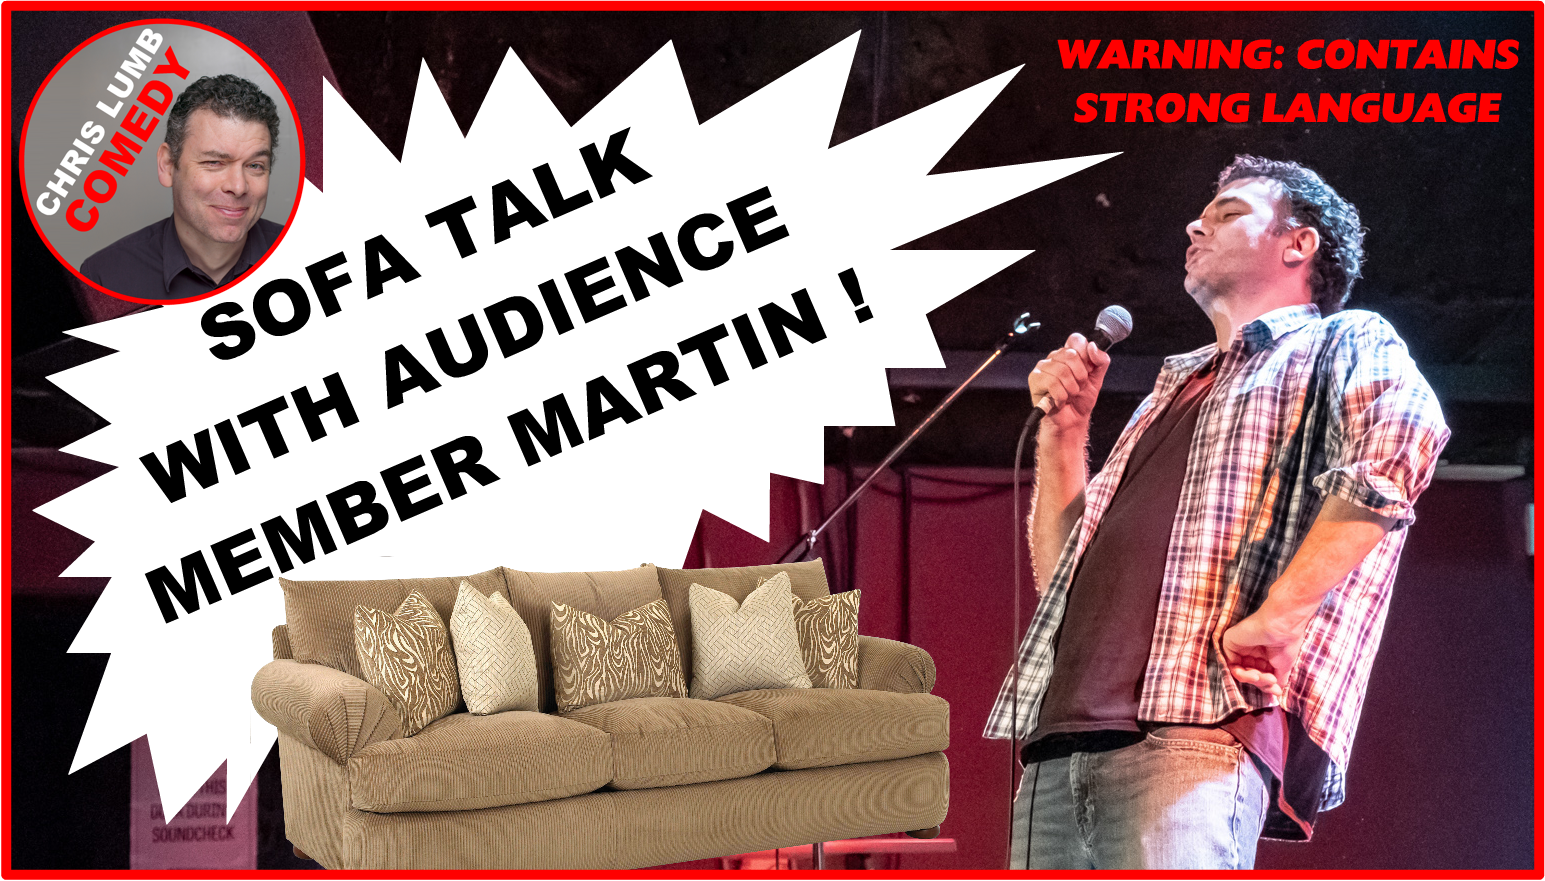 Chris Lumb Comedy "Sofa Talk with Audience Member Martin"